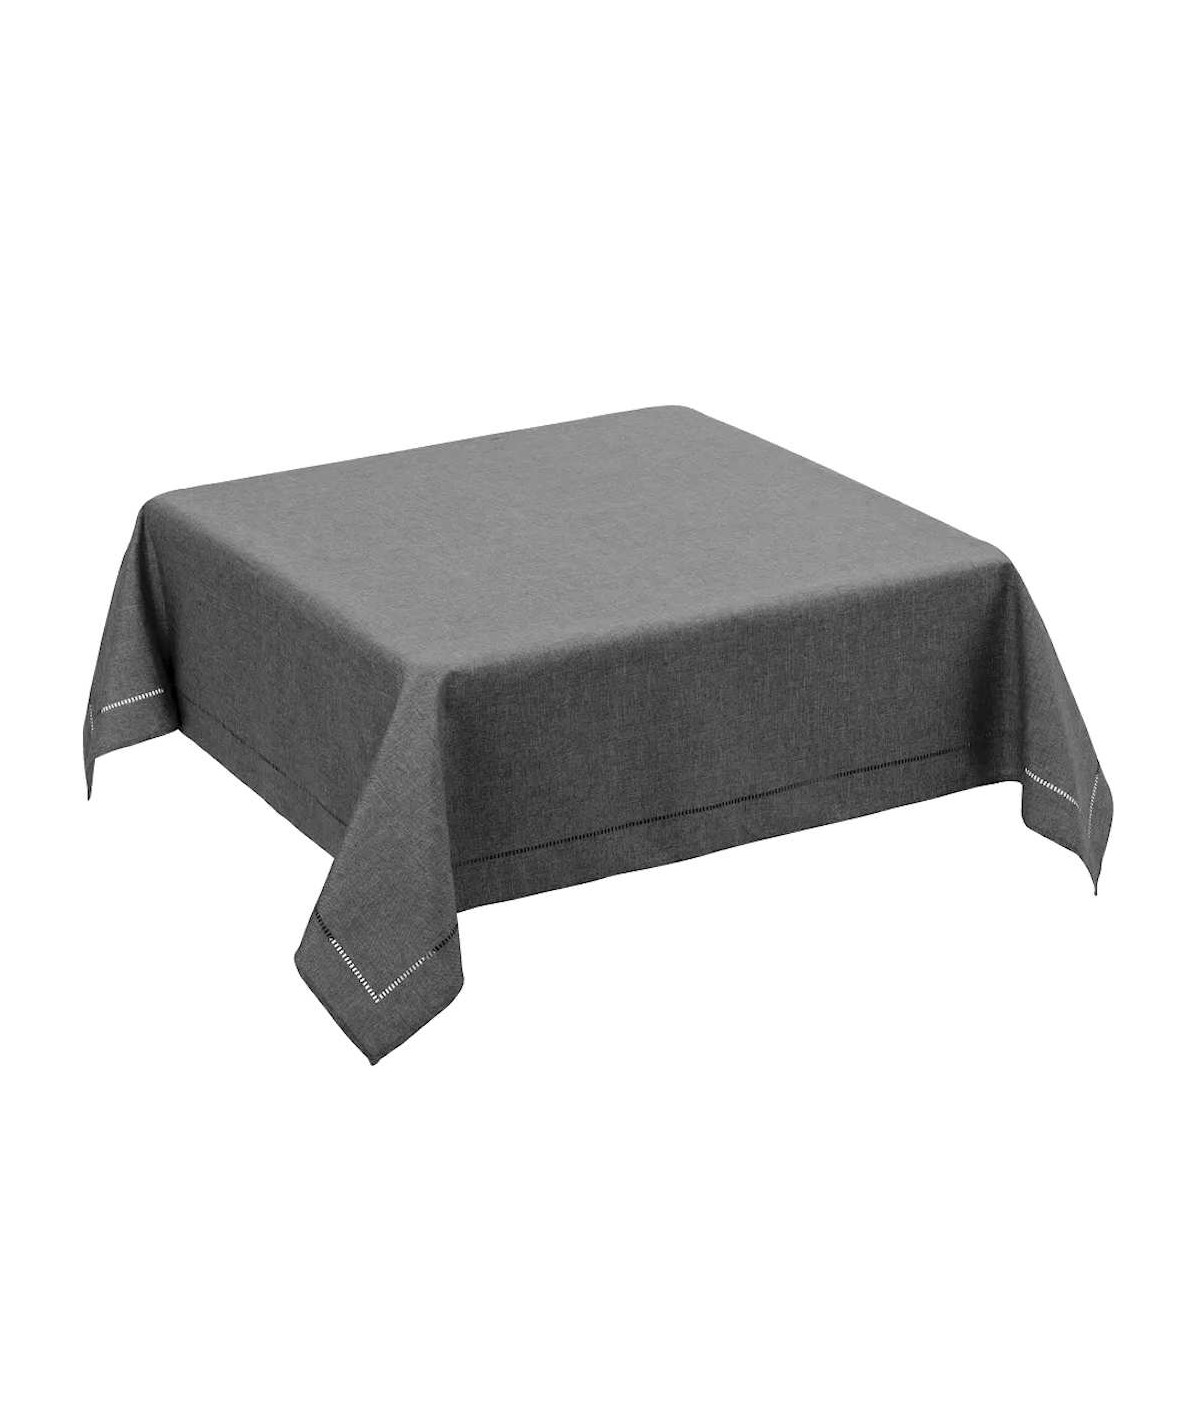 Nappe carrée uni en polyester gris 150x150cm - Yesdeko